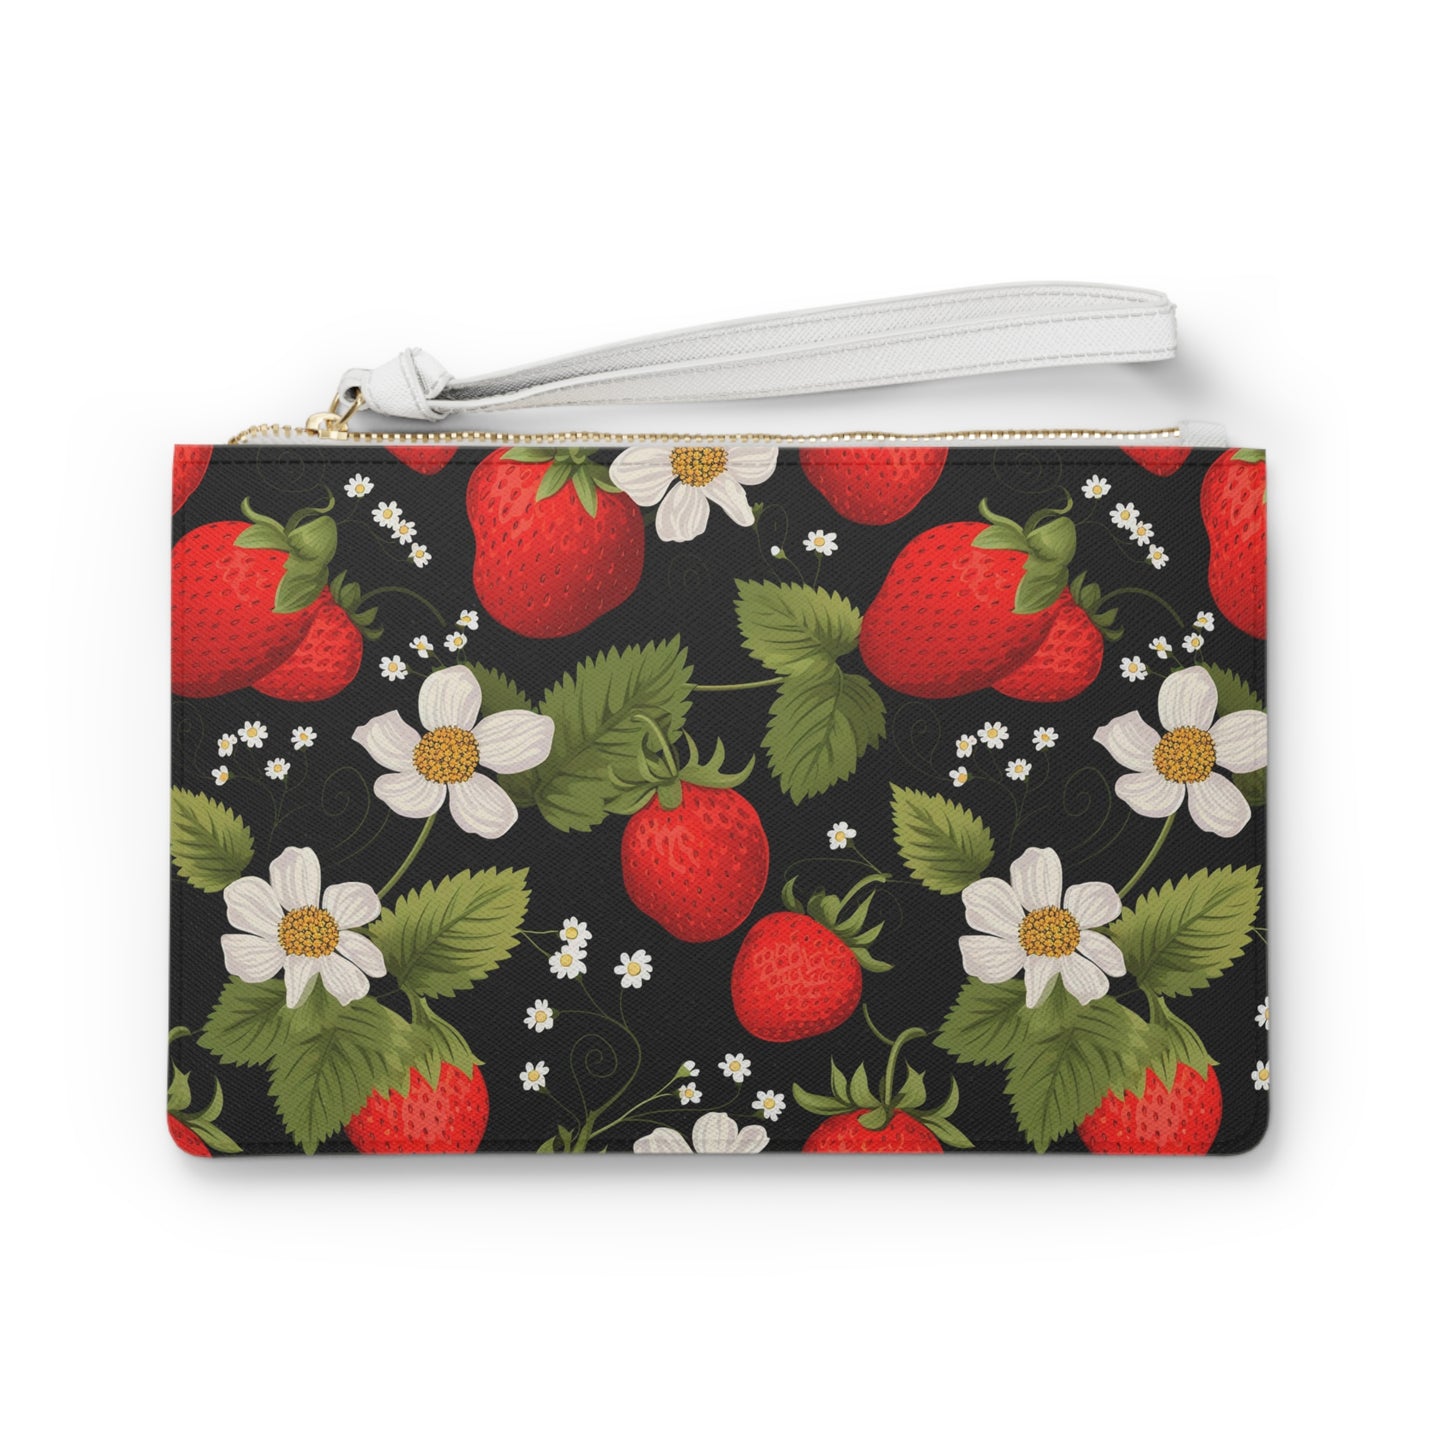 Cute Strawberry Clutch Bag